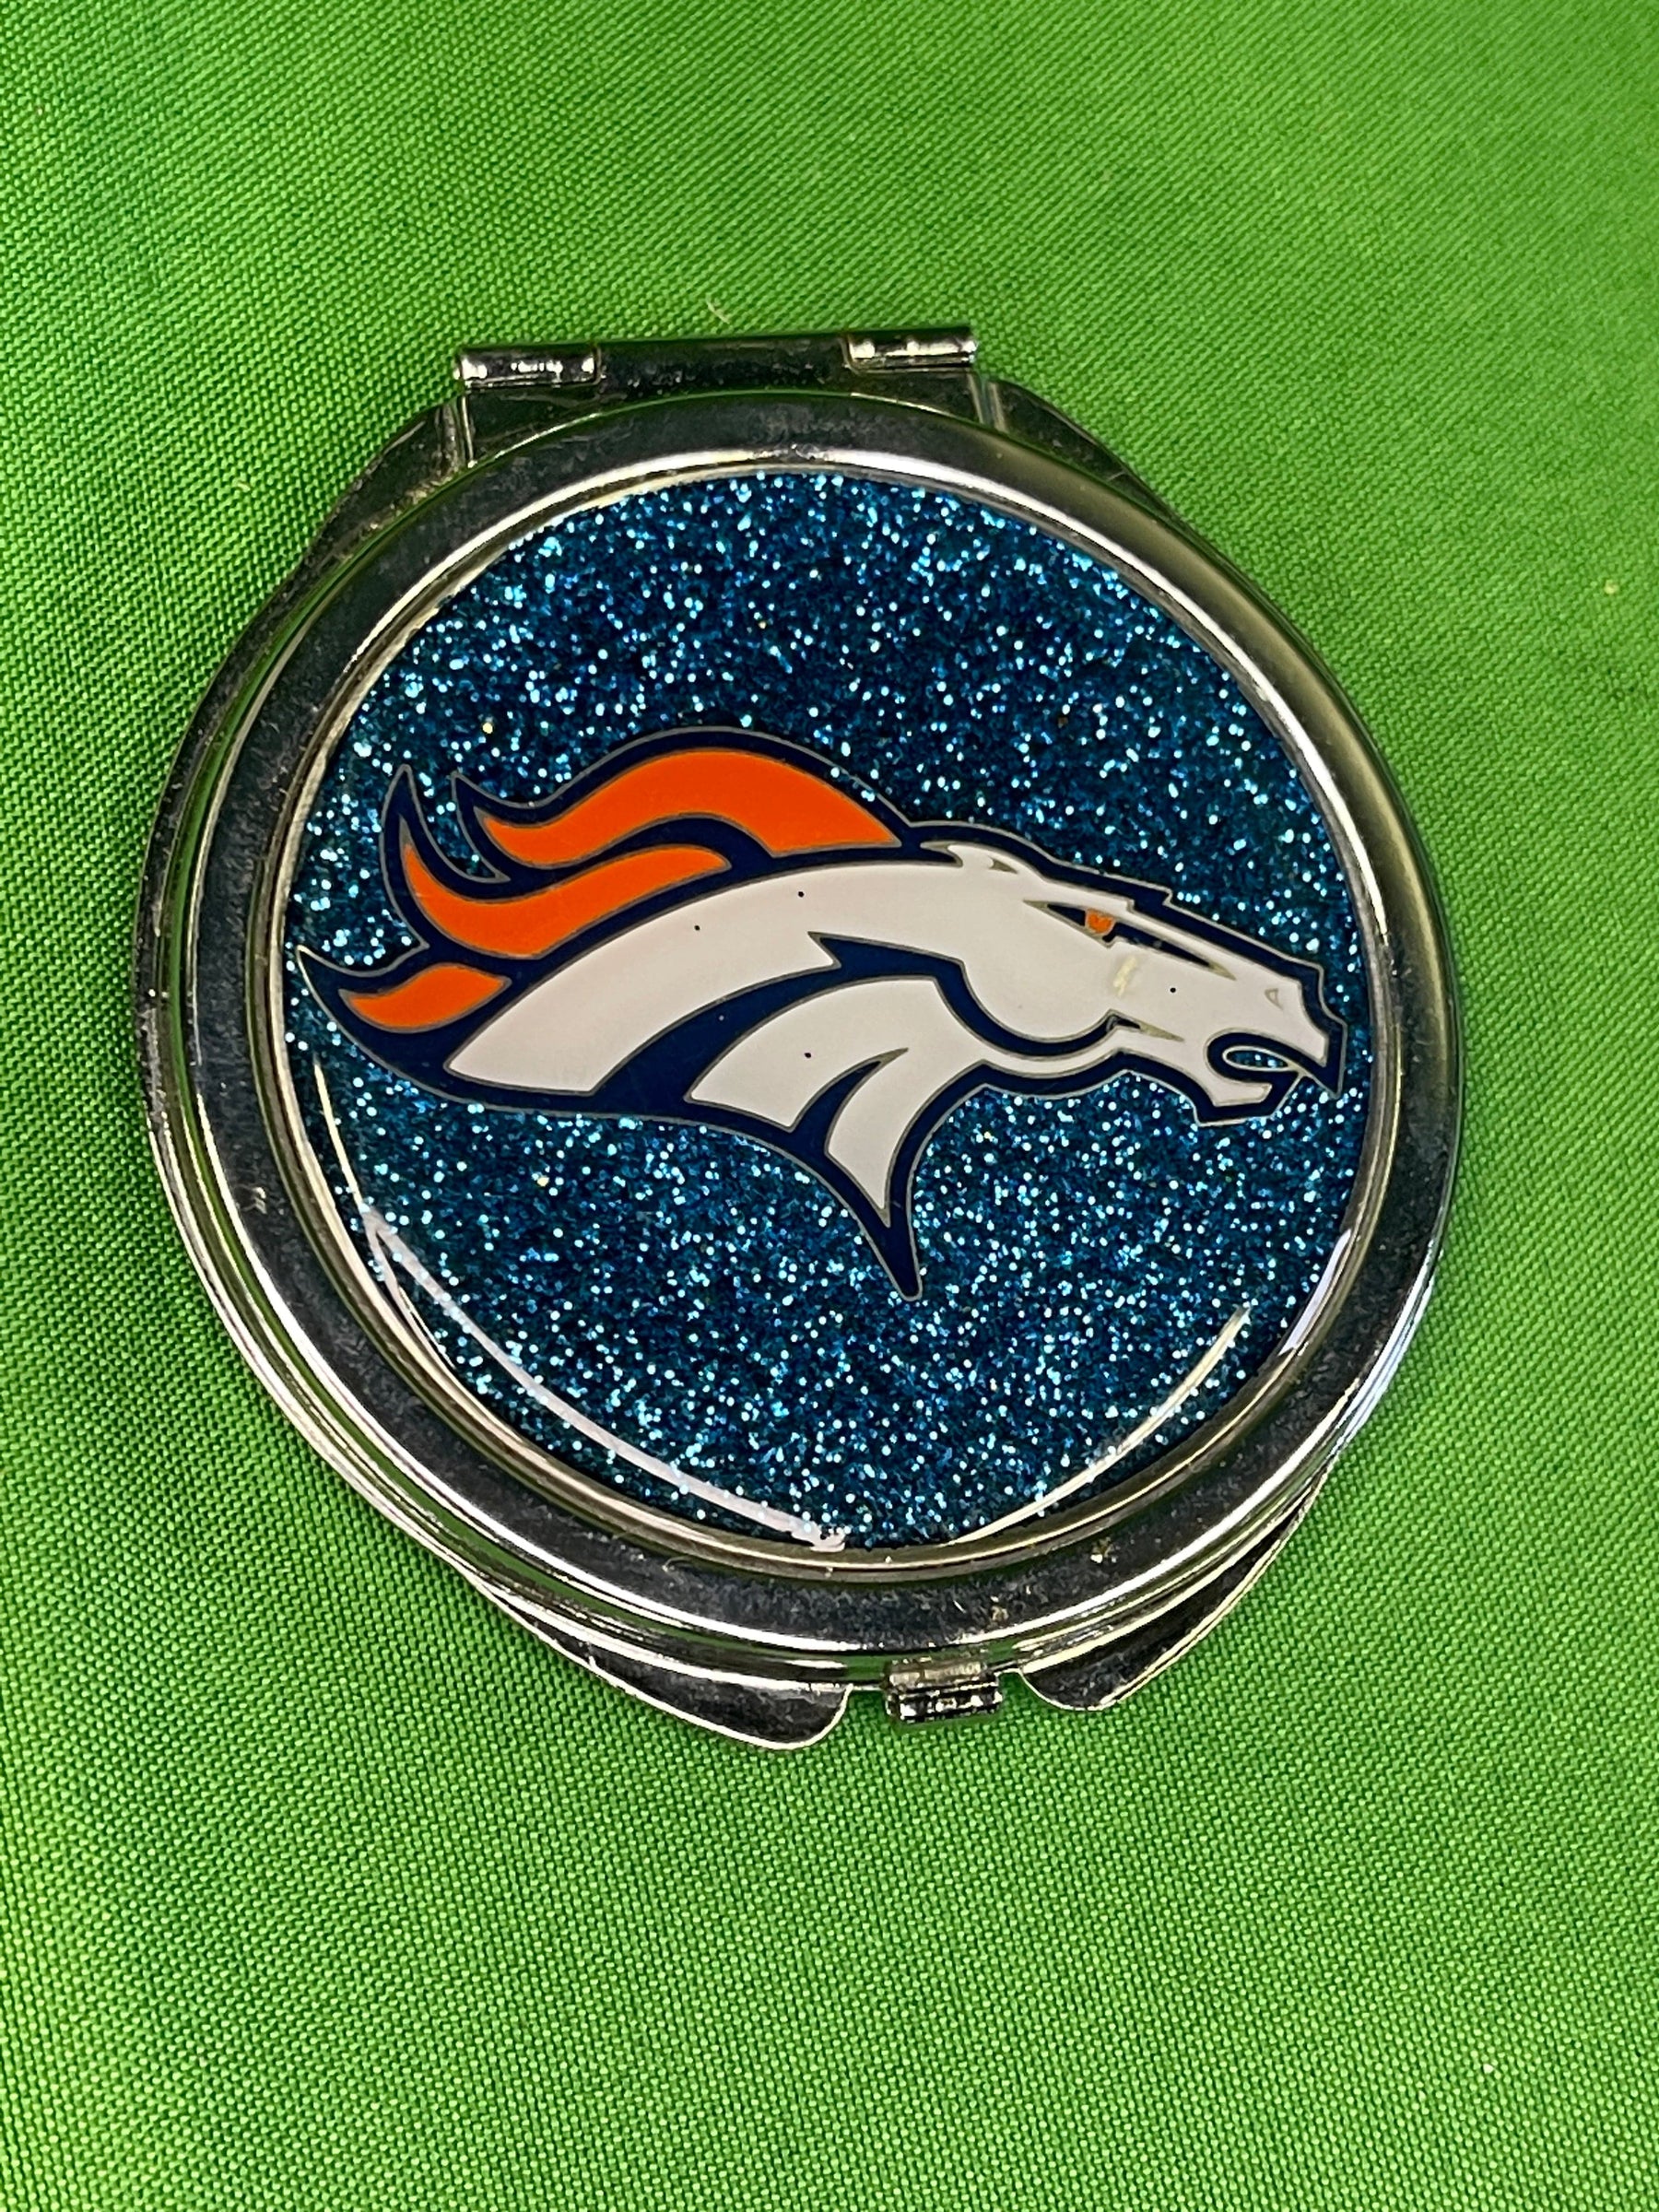 NFL Denver Broncos Glittery Silver Compact Mirror